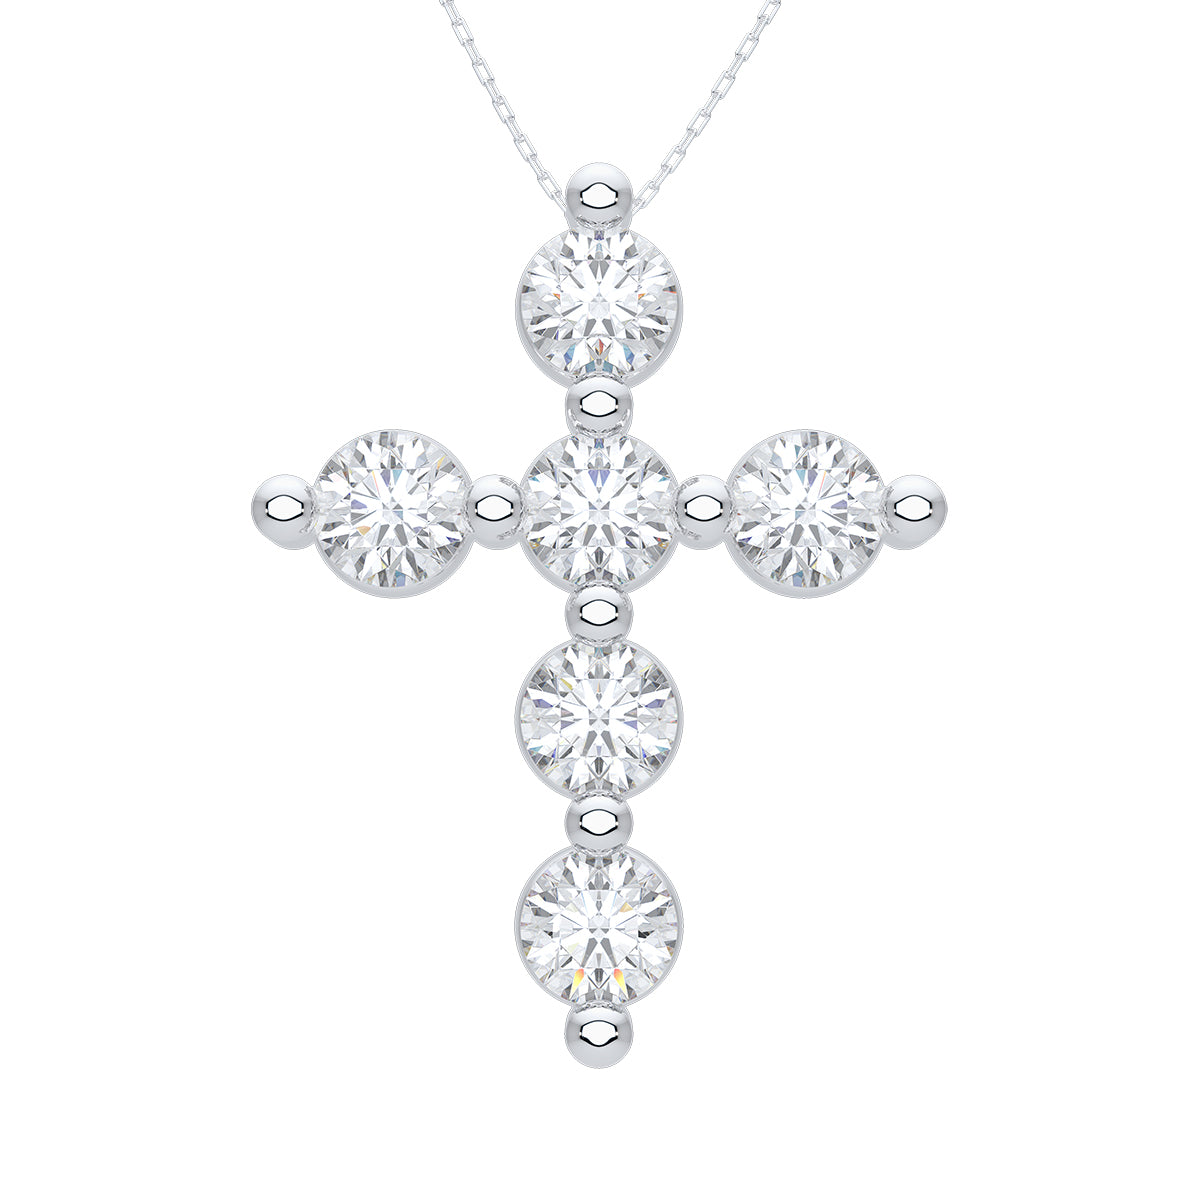 Charlie Cloud® Floating Diamond Cross Necklace 1.44 ctw